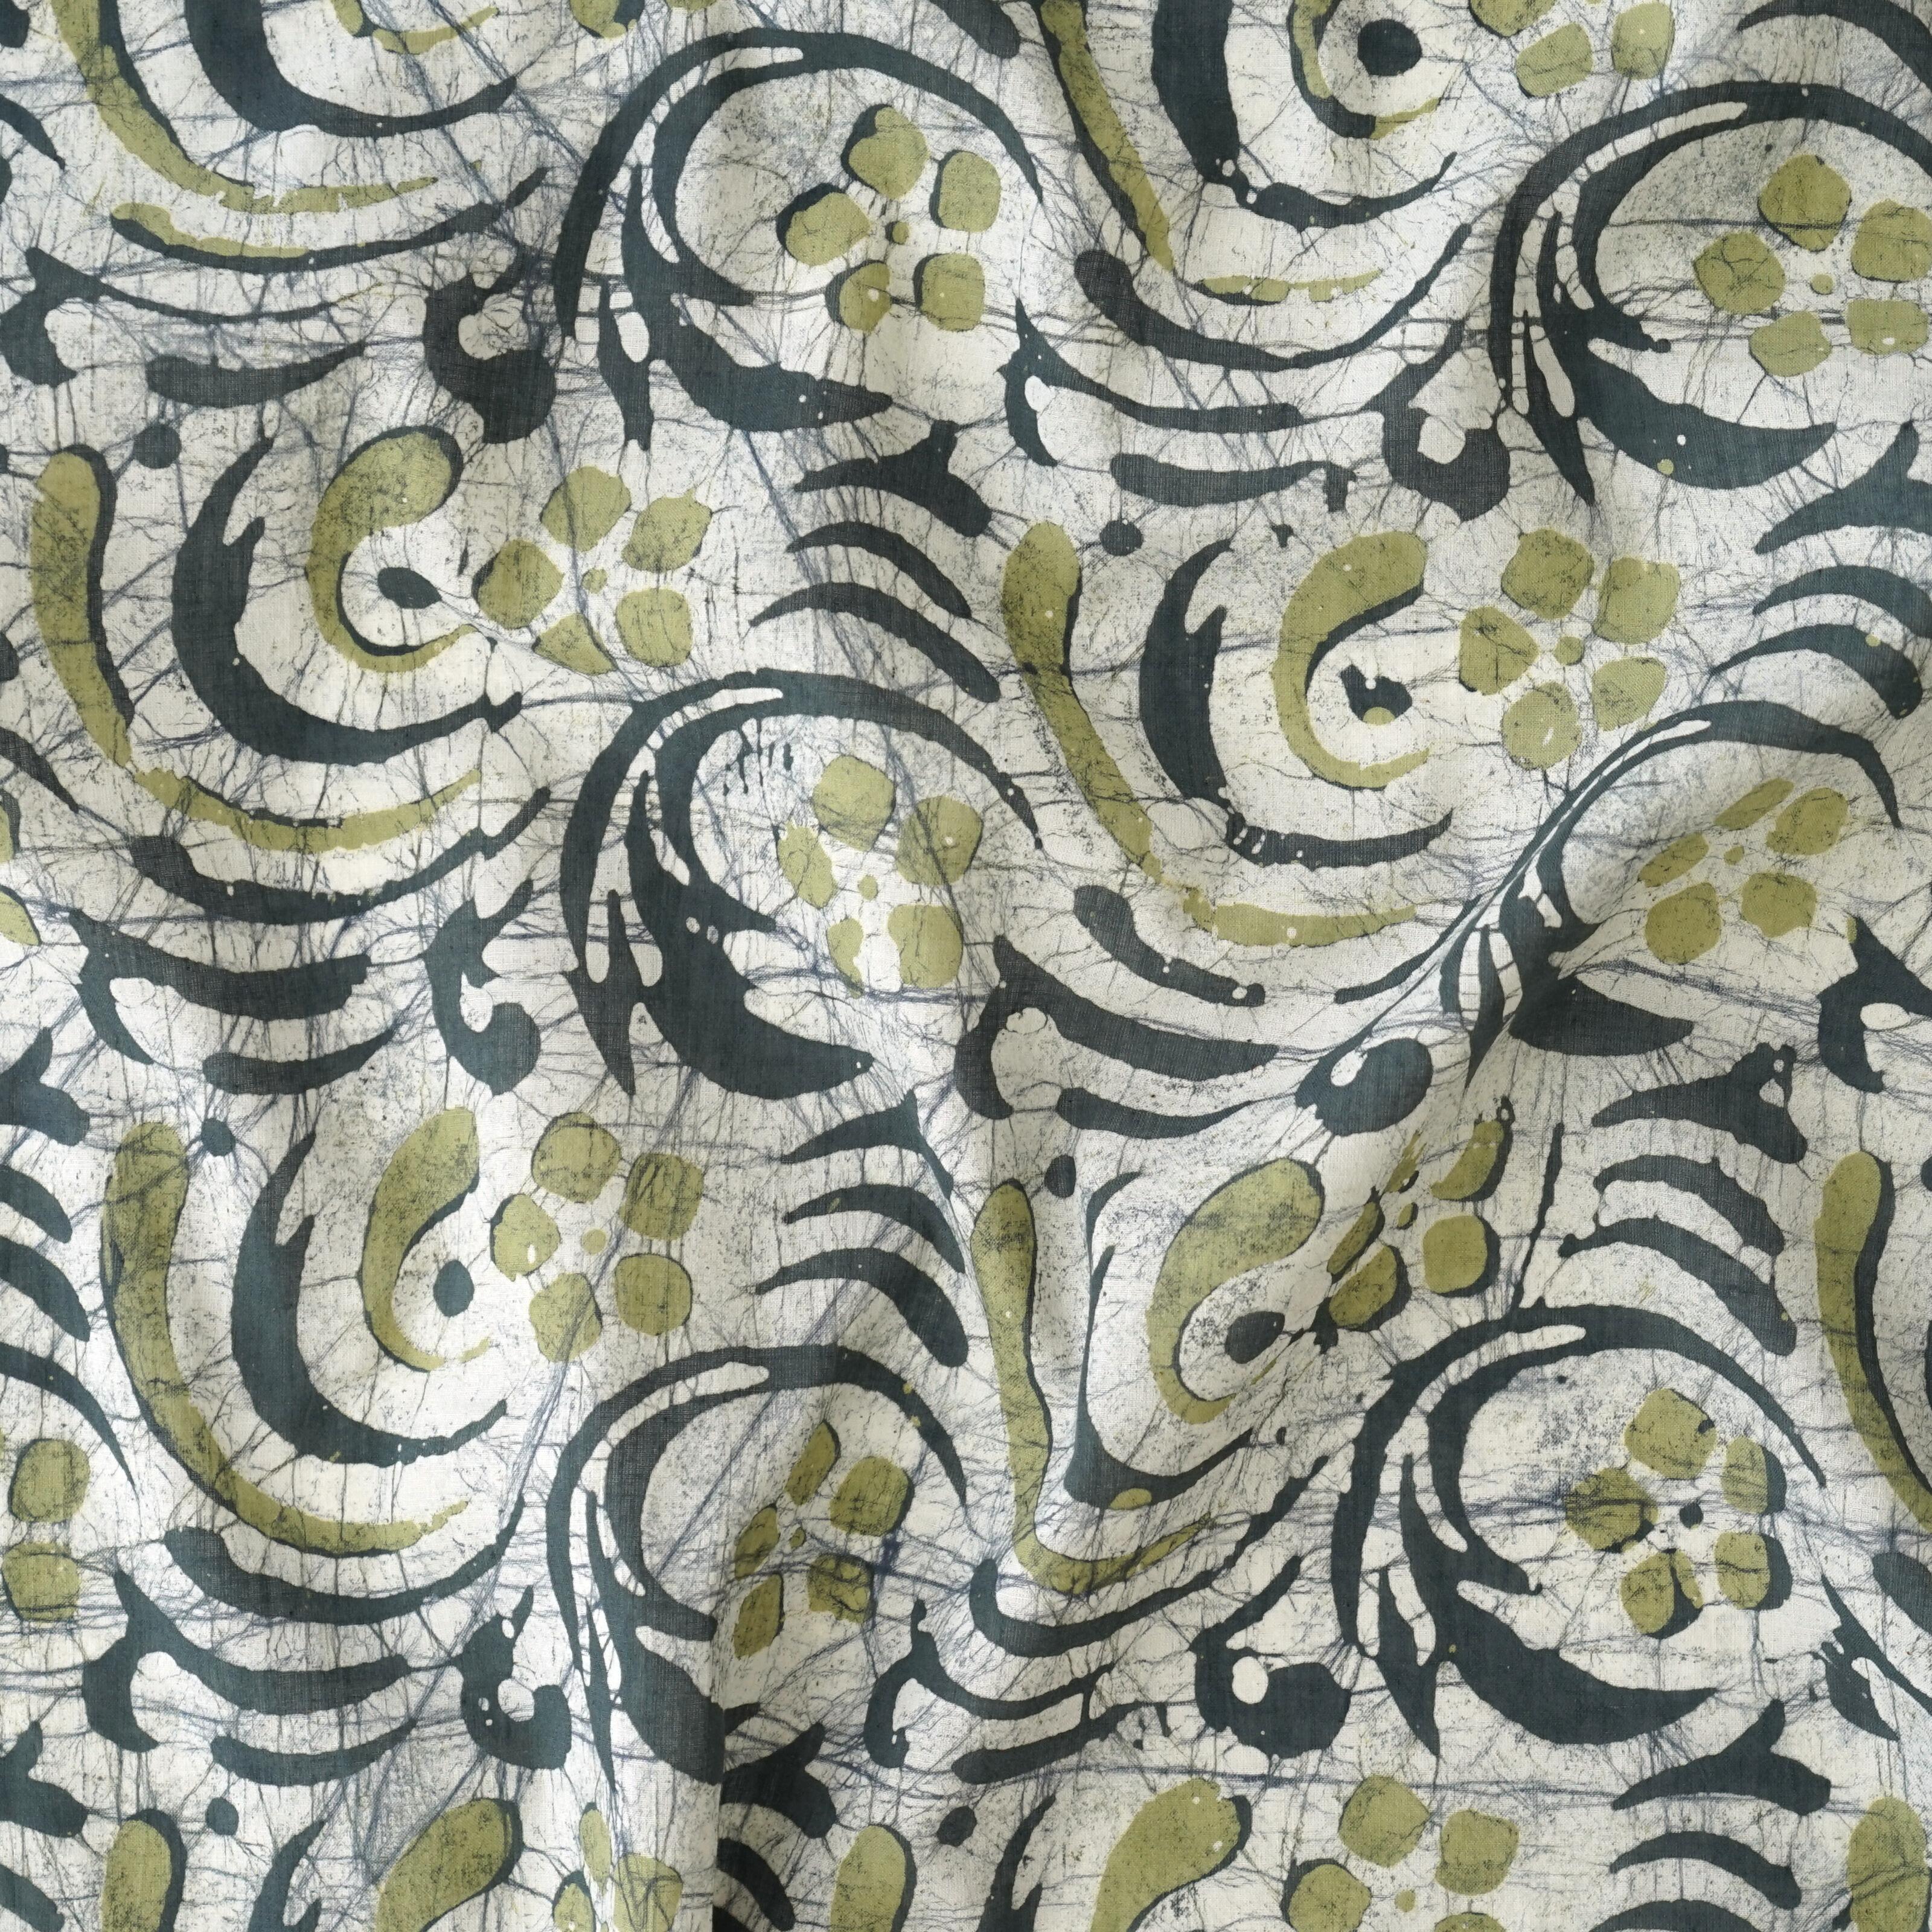 100% Block-Printed Batik Cotton Fabric From India - River Eddy Motif - Contrast